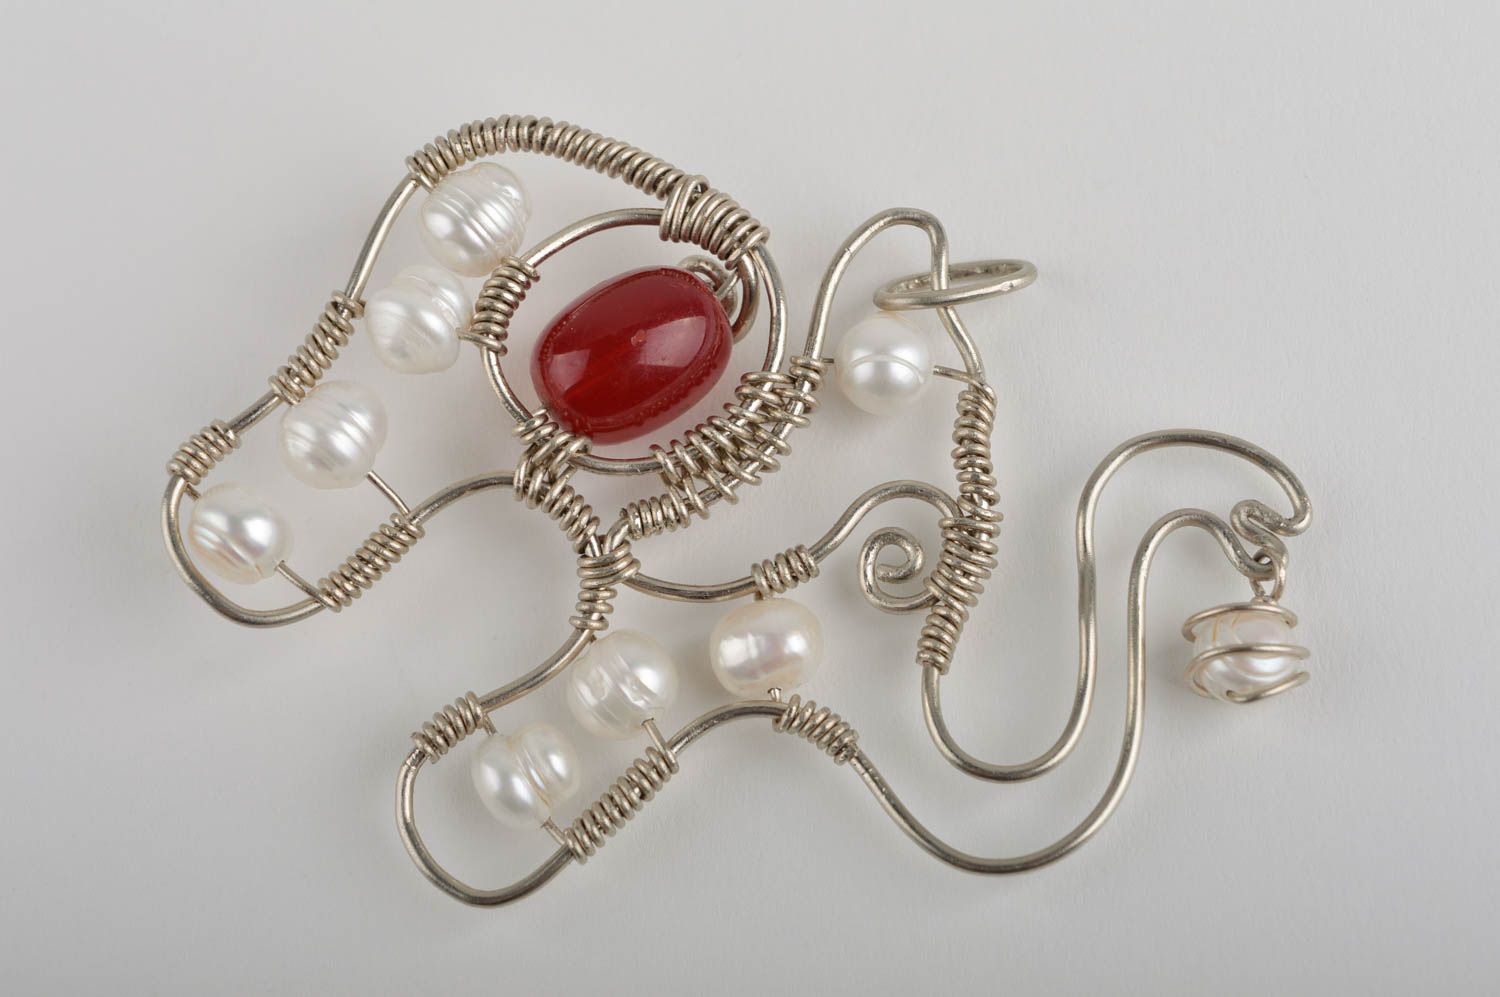 Handmade metal jewelry pendant necklace charm necklace designer accessories photo 3